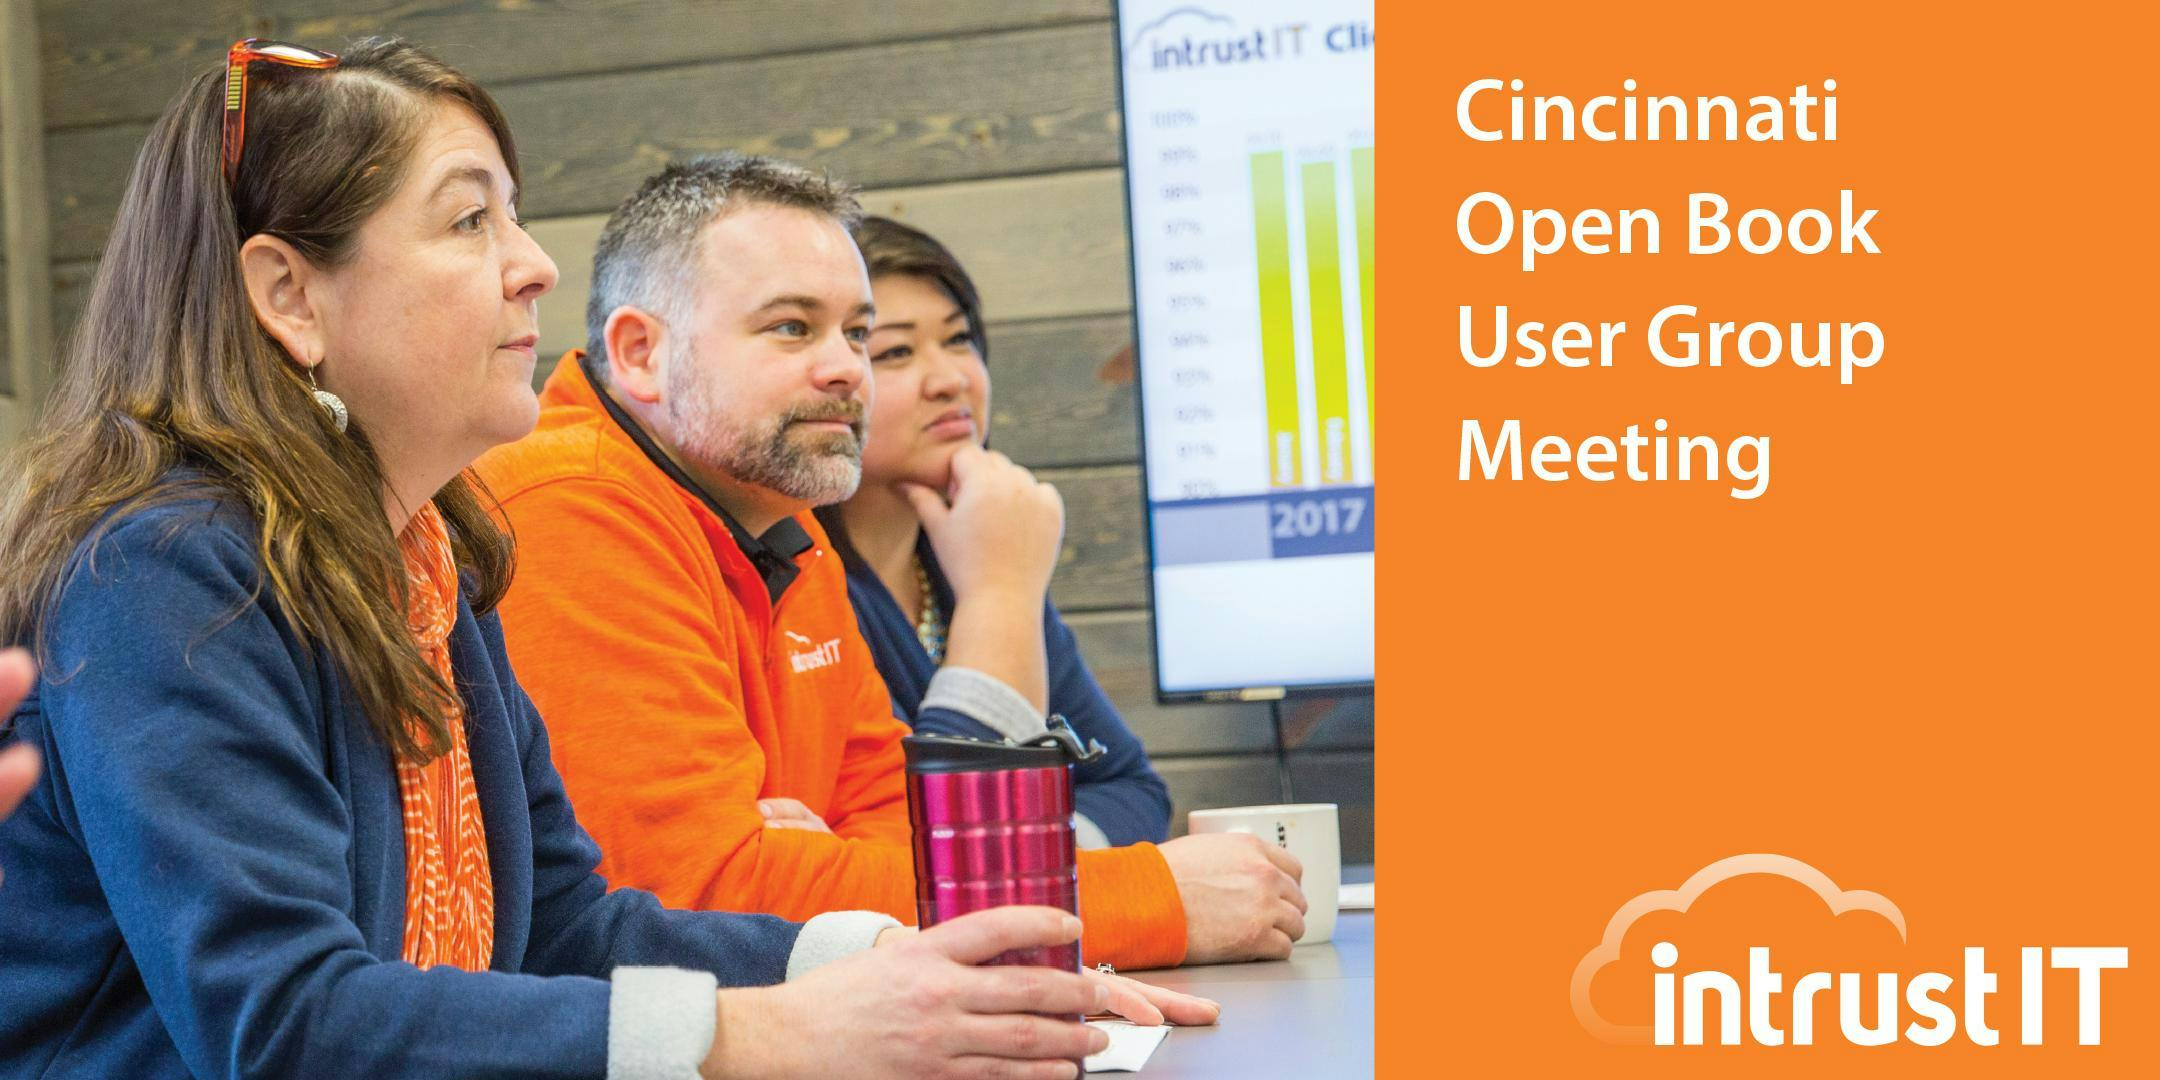 Cincinnati Open Book User Group August 21st Meeting